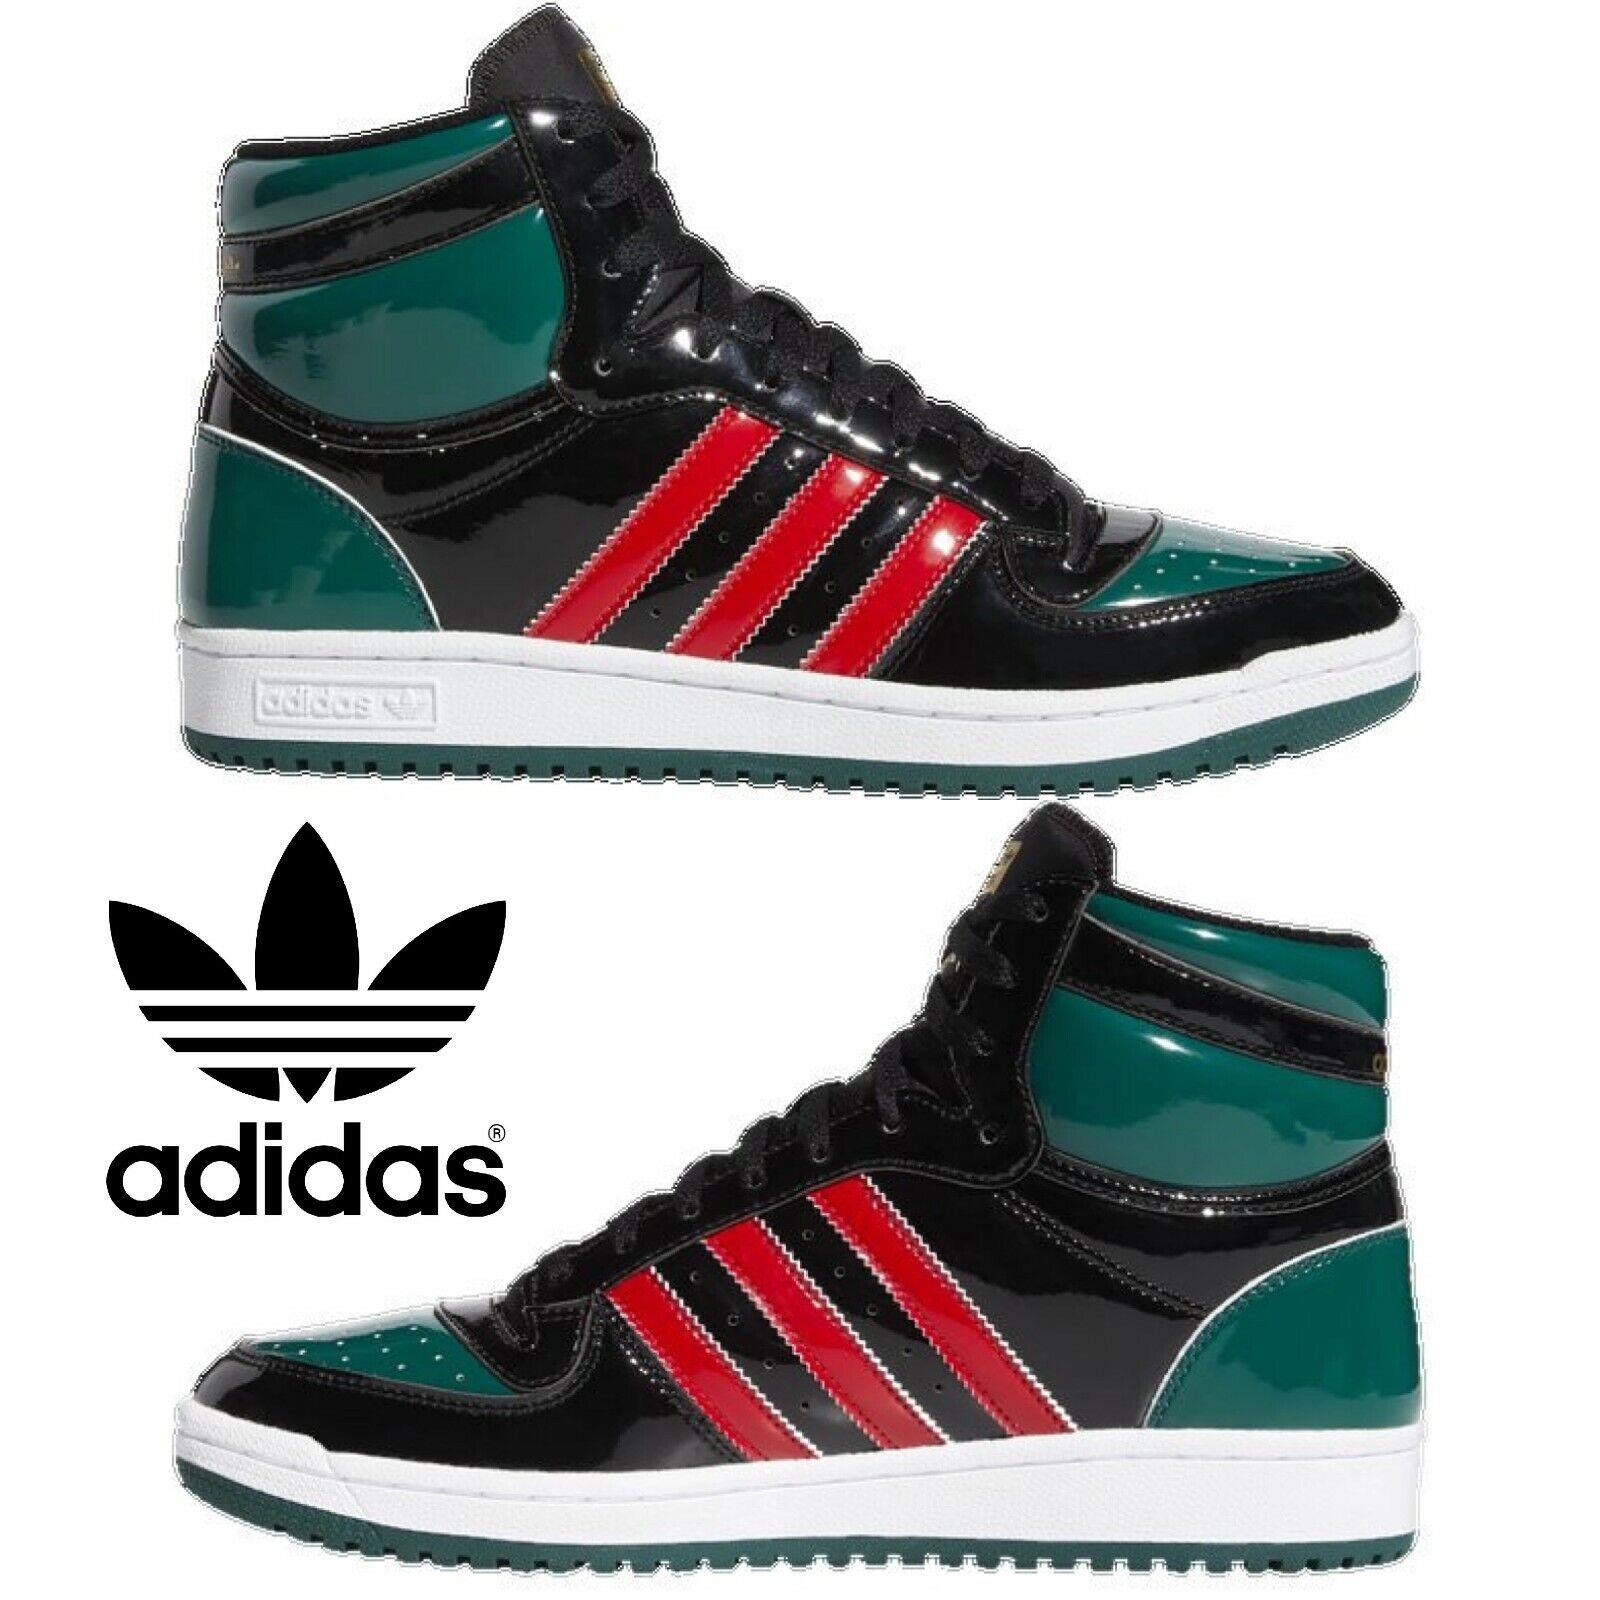 Adidas Originals Top Ten Hi Men`s Sneakers Comfort Casual Shoes Black Green